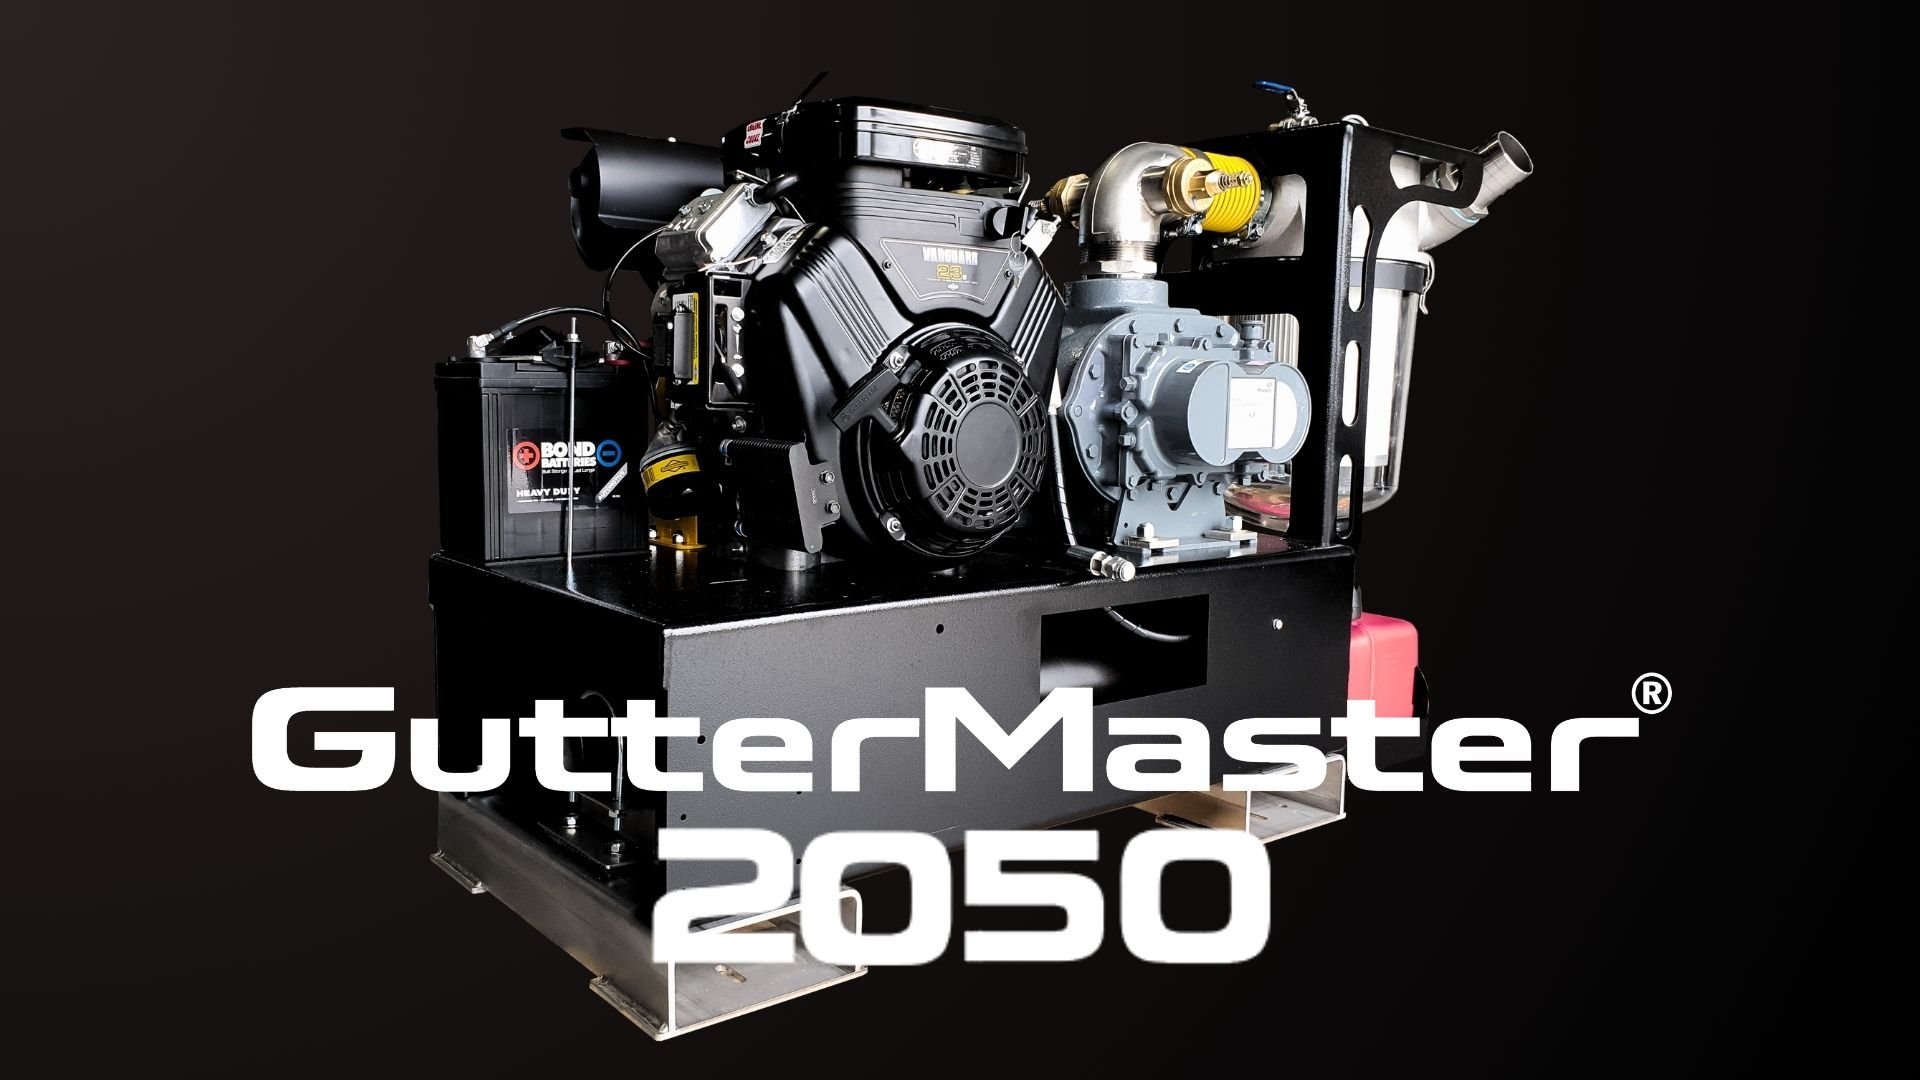 Gutter vacuum system gatter master 2050 proudly australian made